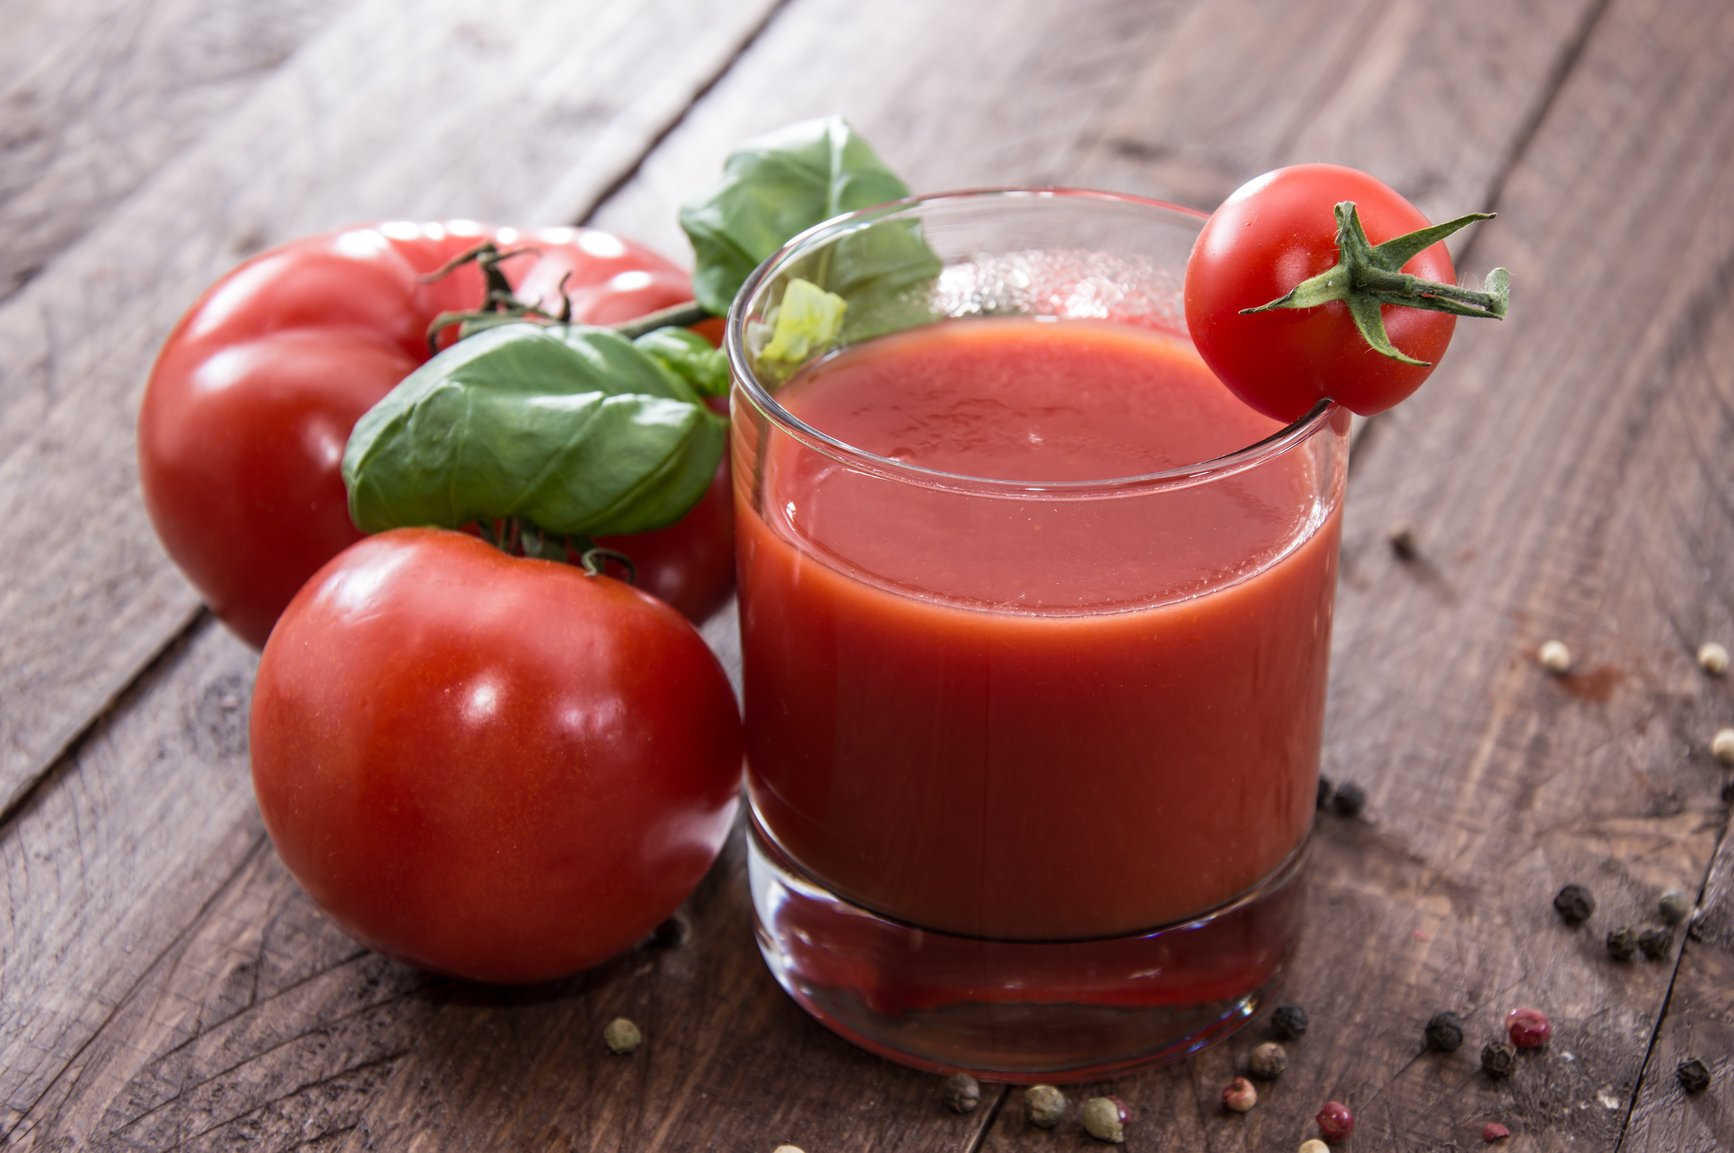 kak prigotovit tomatnyjj sok v domashnikh usloviyakh123 Як приготувати томатний сік у домашніх умовах